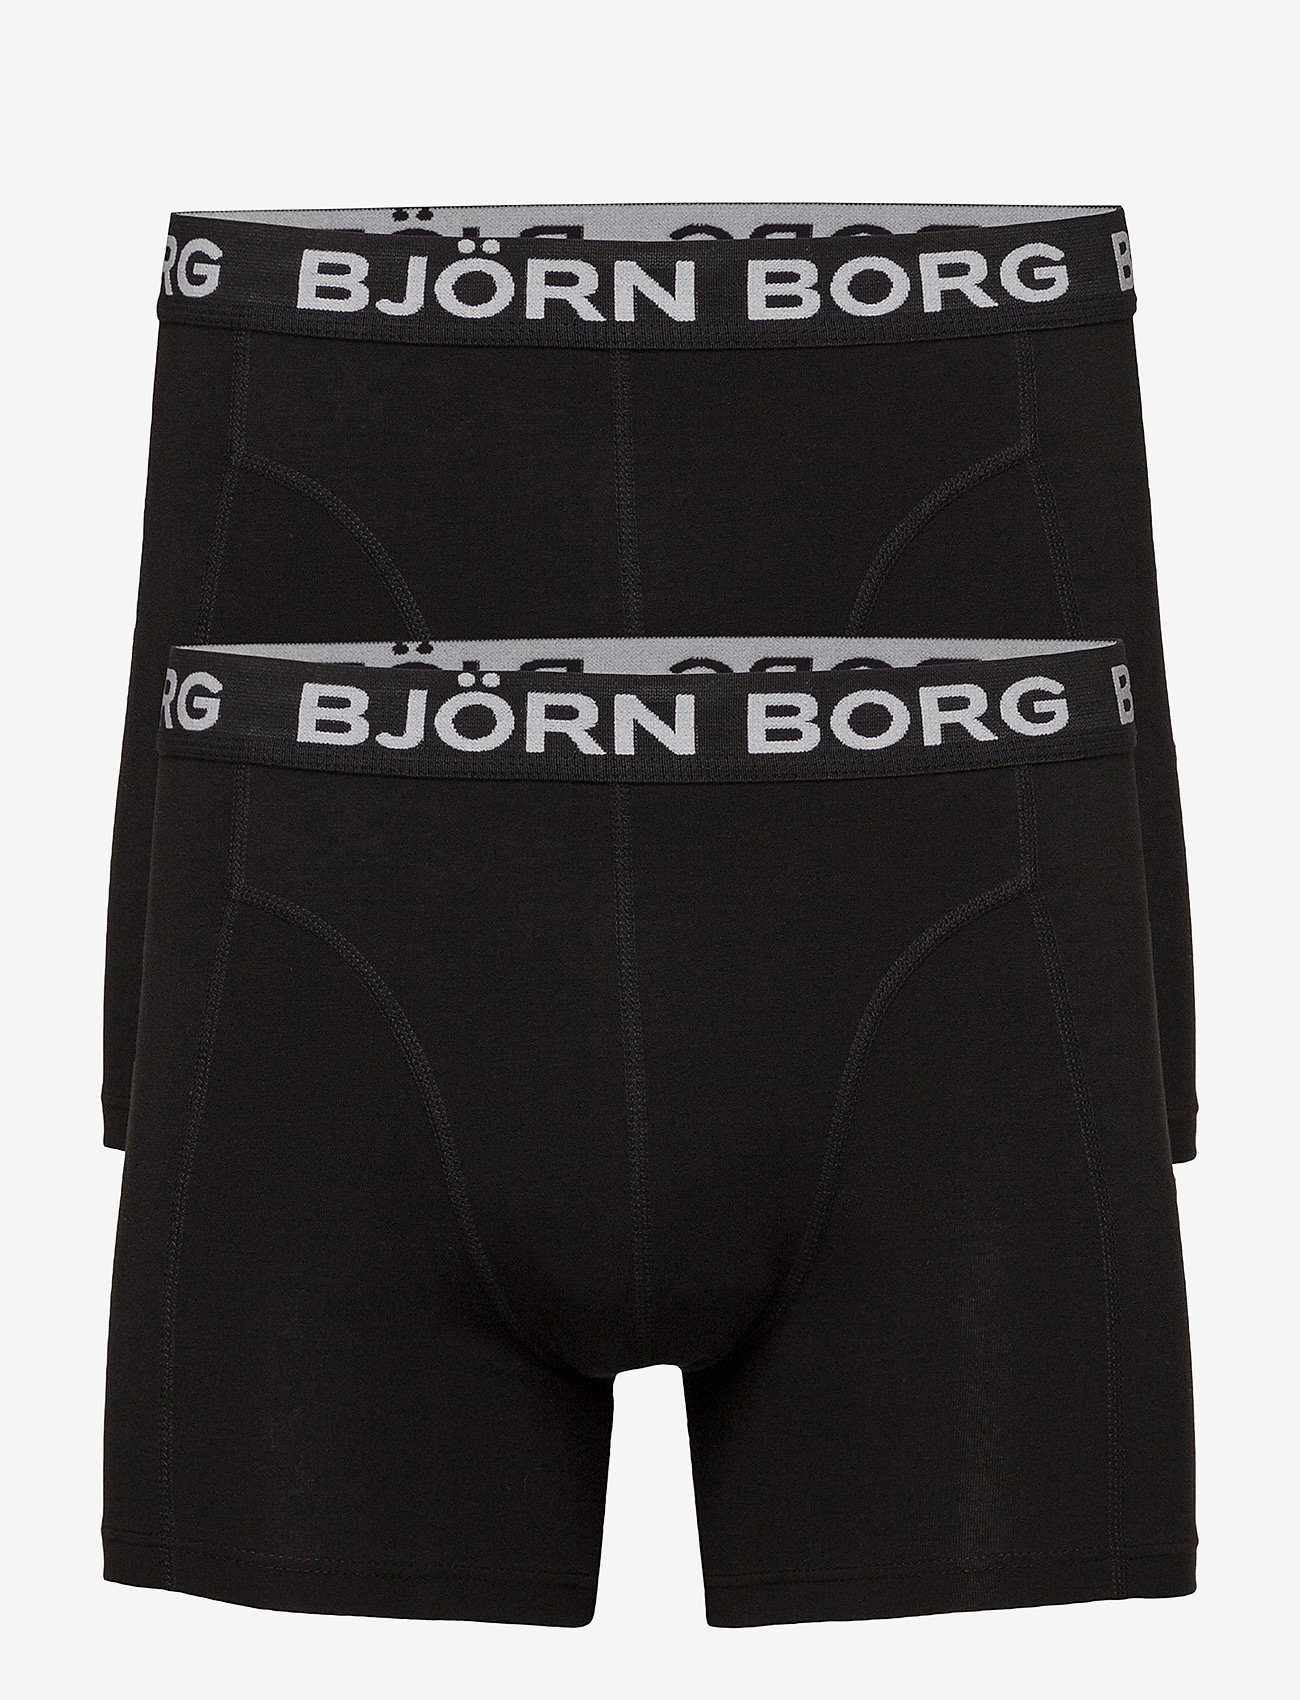 Björn Borg - SOLIDS SAMMY SHORTS - lowest prices - black - 0